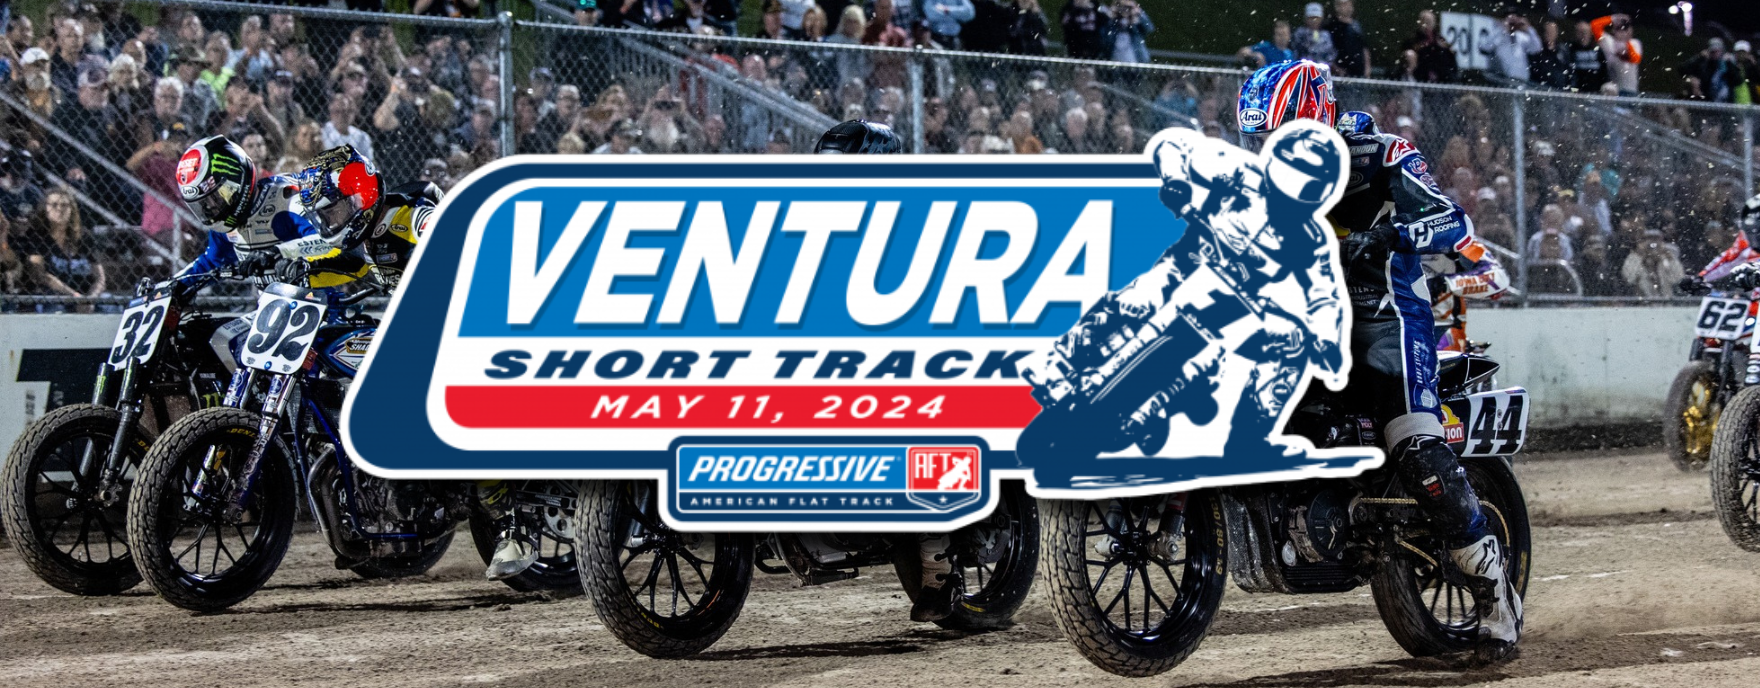 2024 Progressive American Flat Track Championship Ventura Raceway